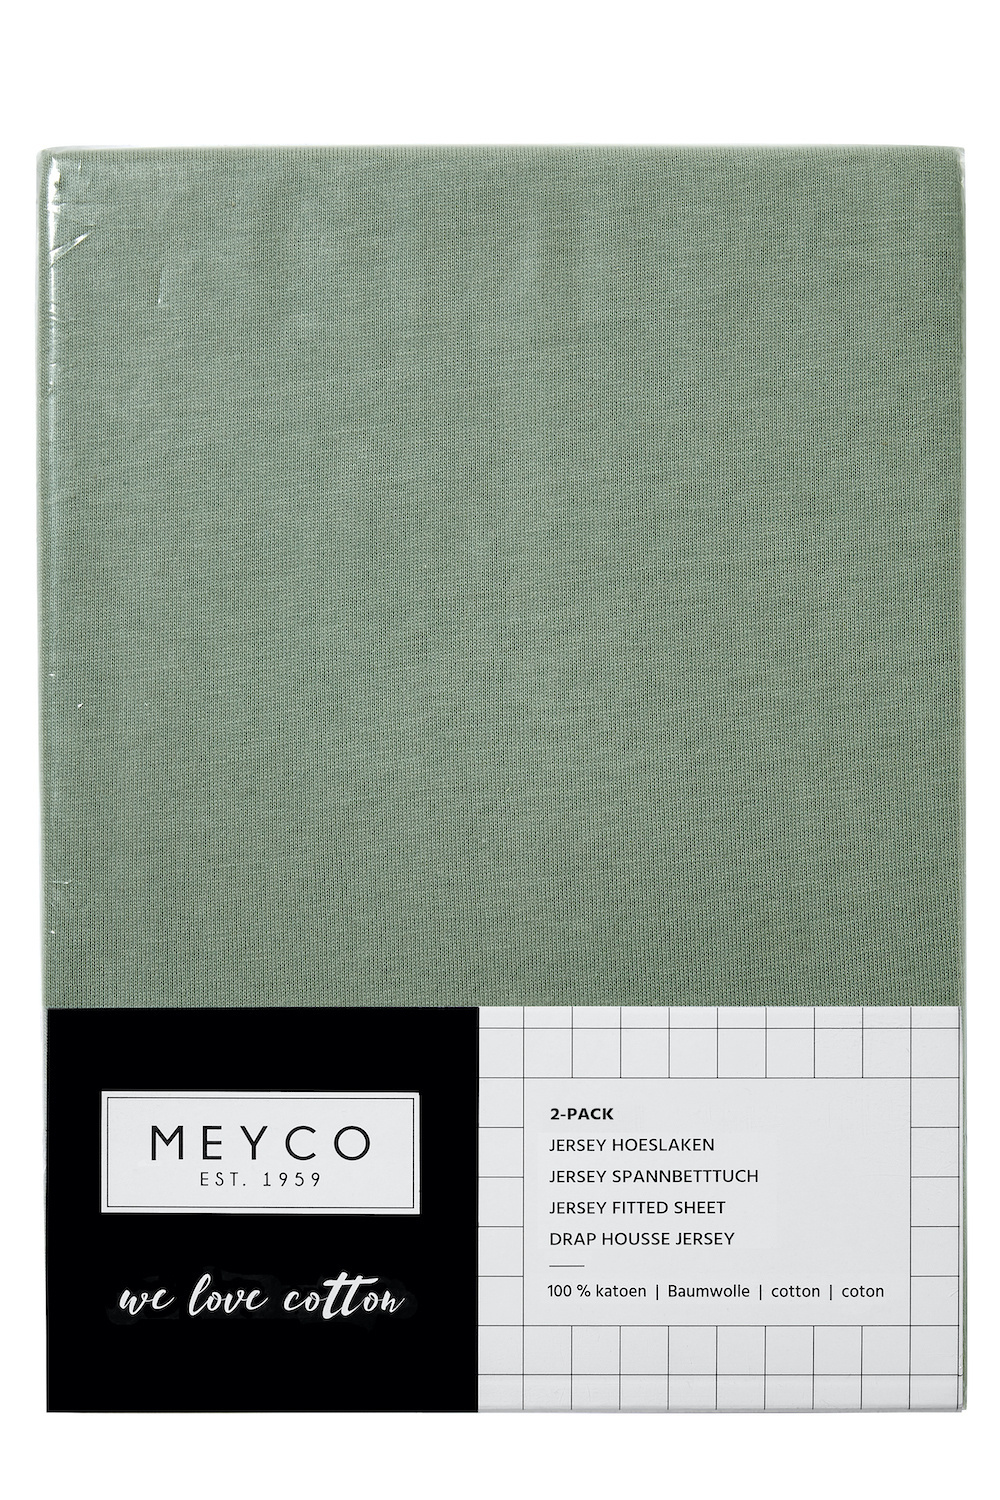 Meyco Drap-housse Jersey 50X90 Sand 